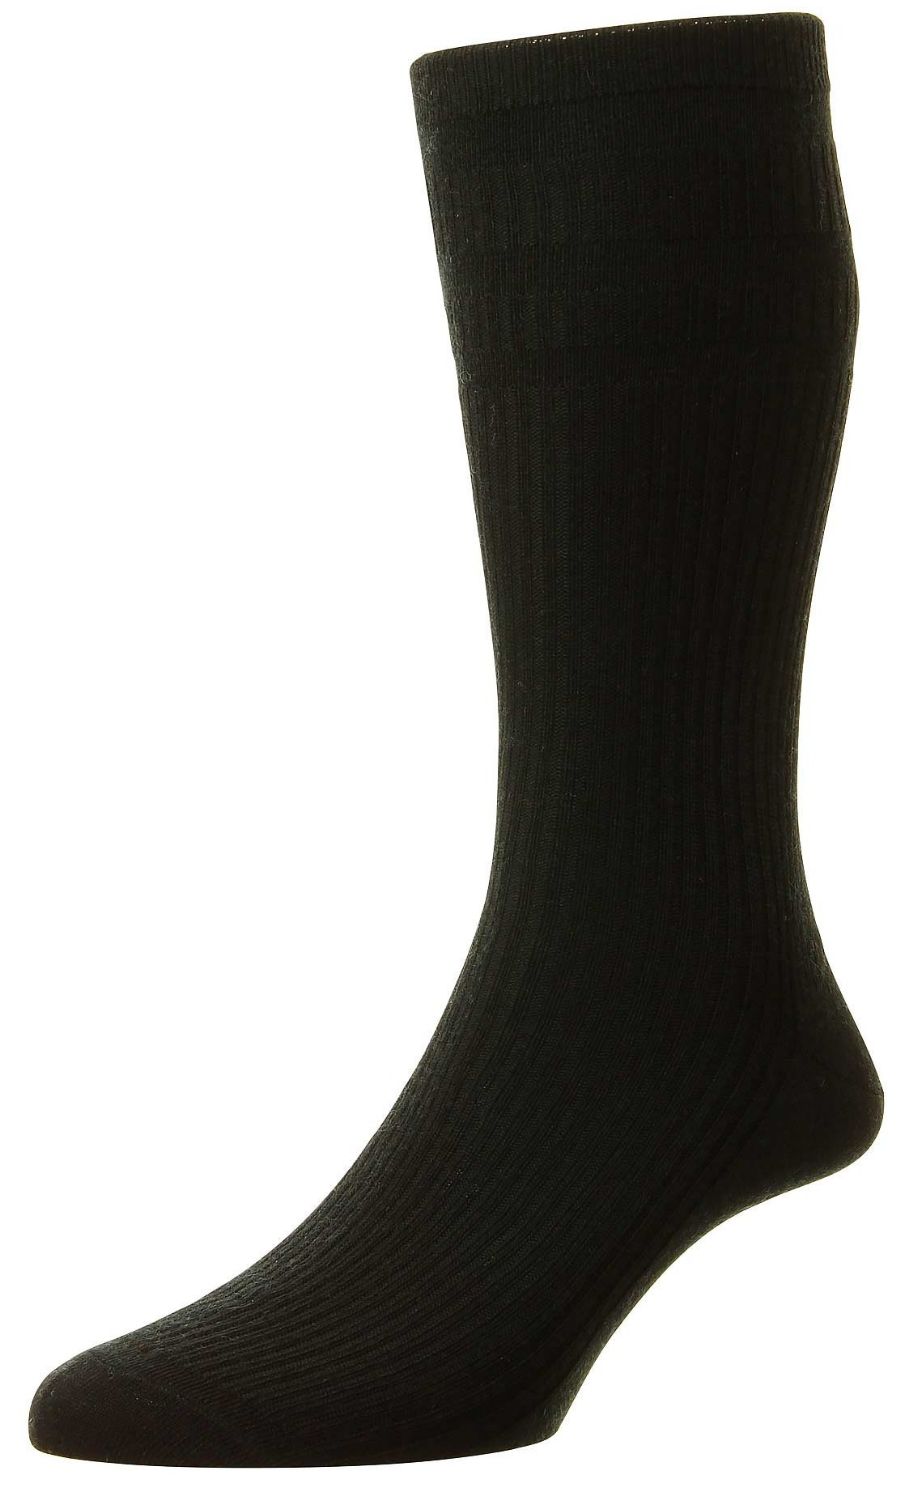 HJ90 Softop Socks BLack Size 11-13